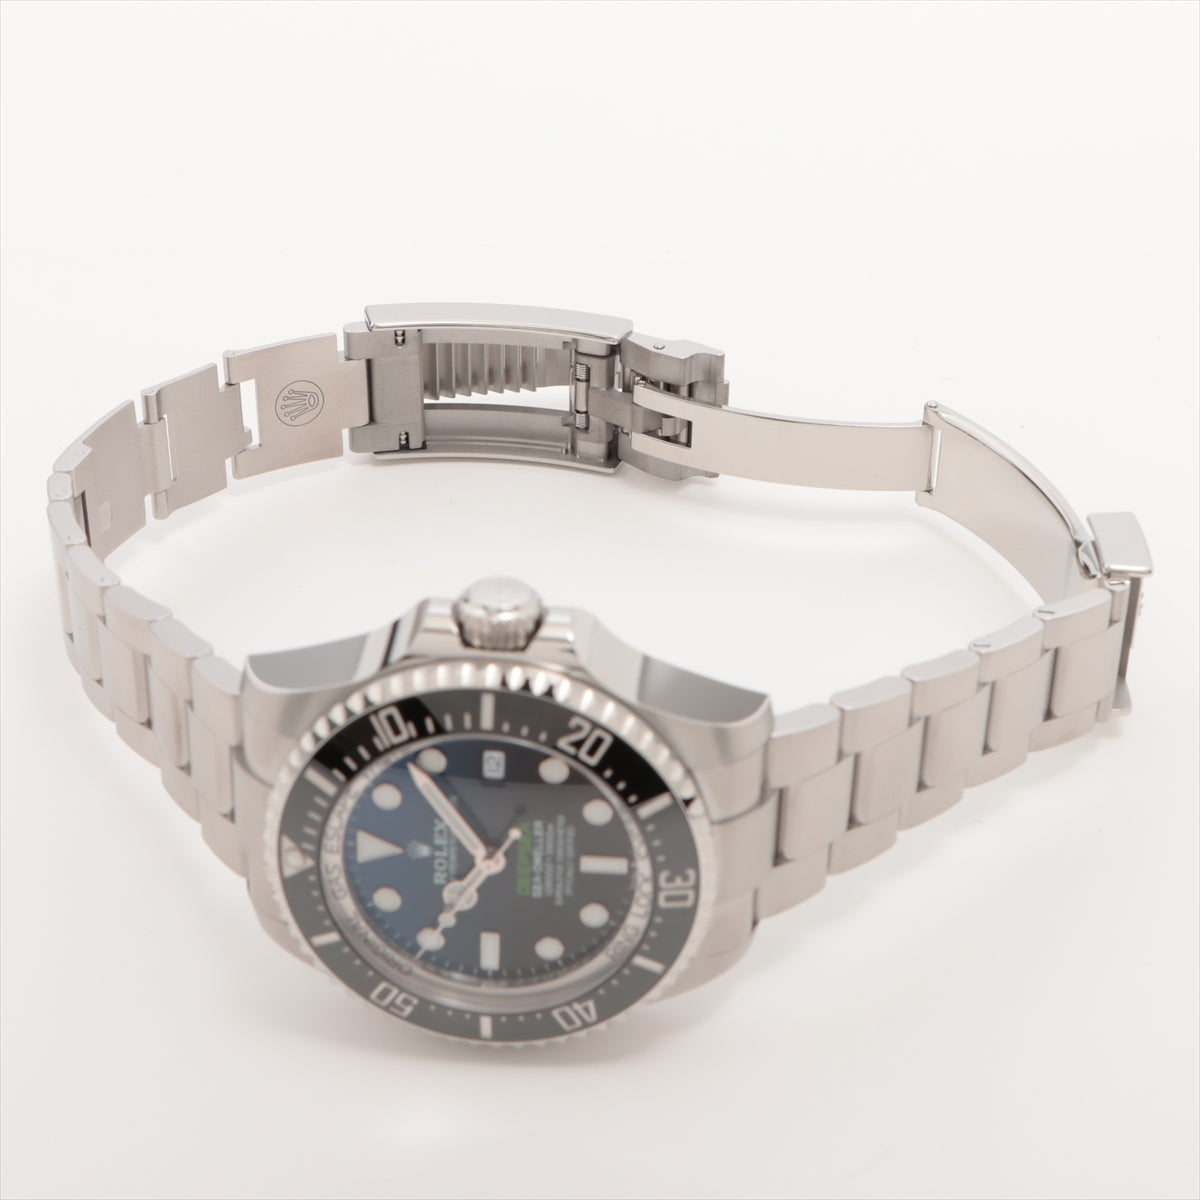 Rolex Sea-Dweller Deep Sea 126660 SS AT D blue dial